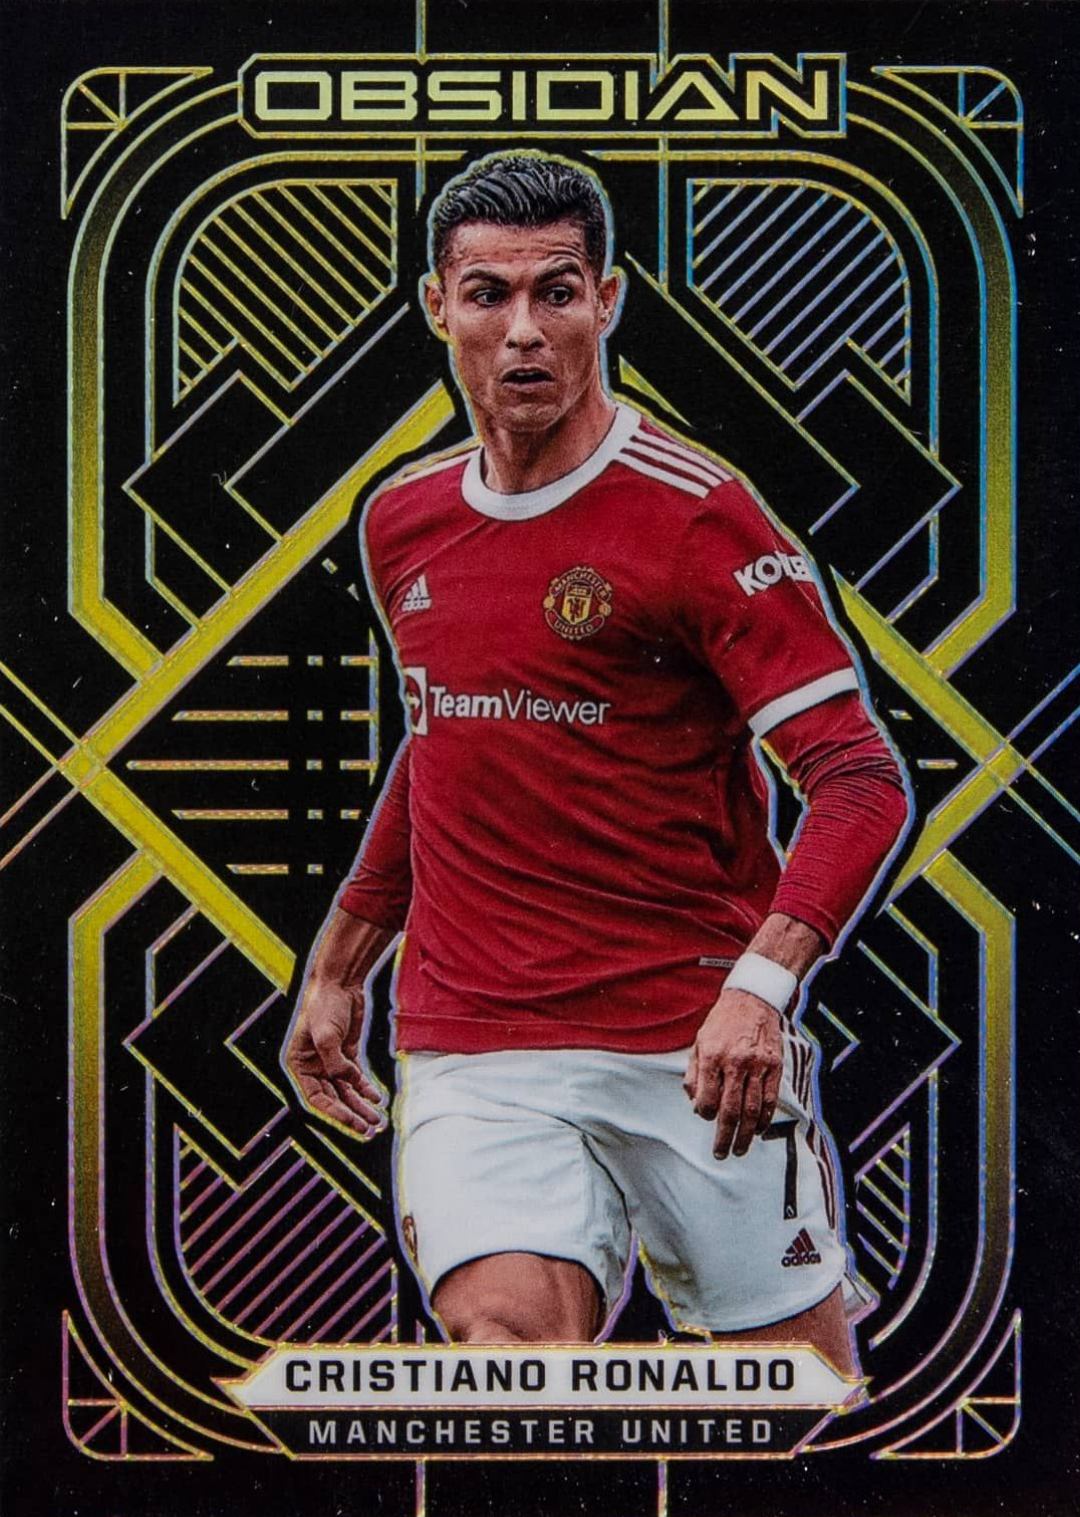 2021 Panini Obsidian Cristiano Ronaldo #13 Soccer Card